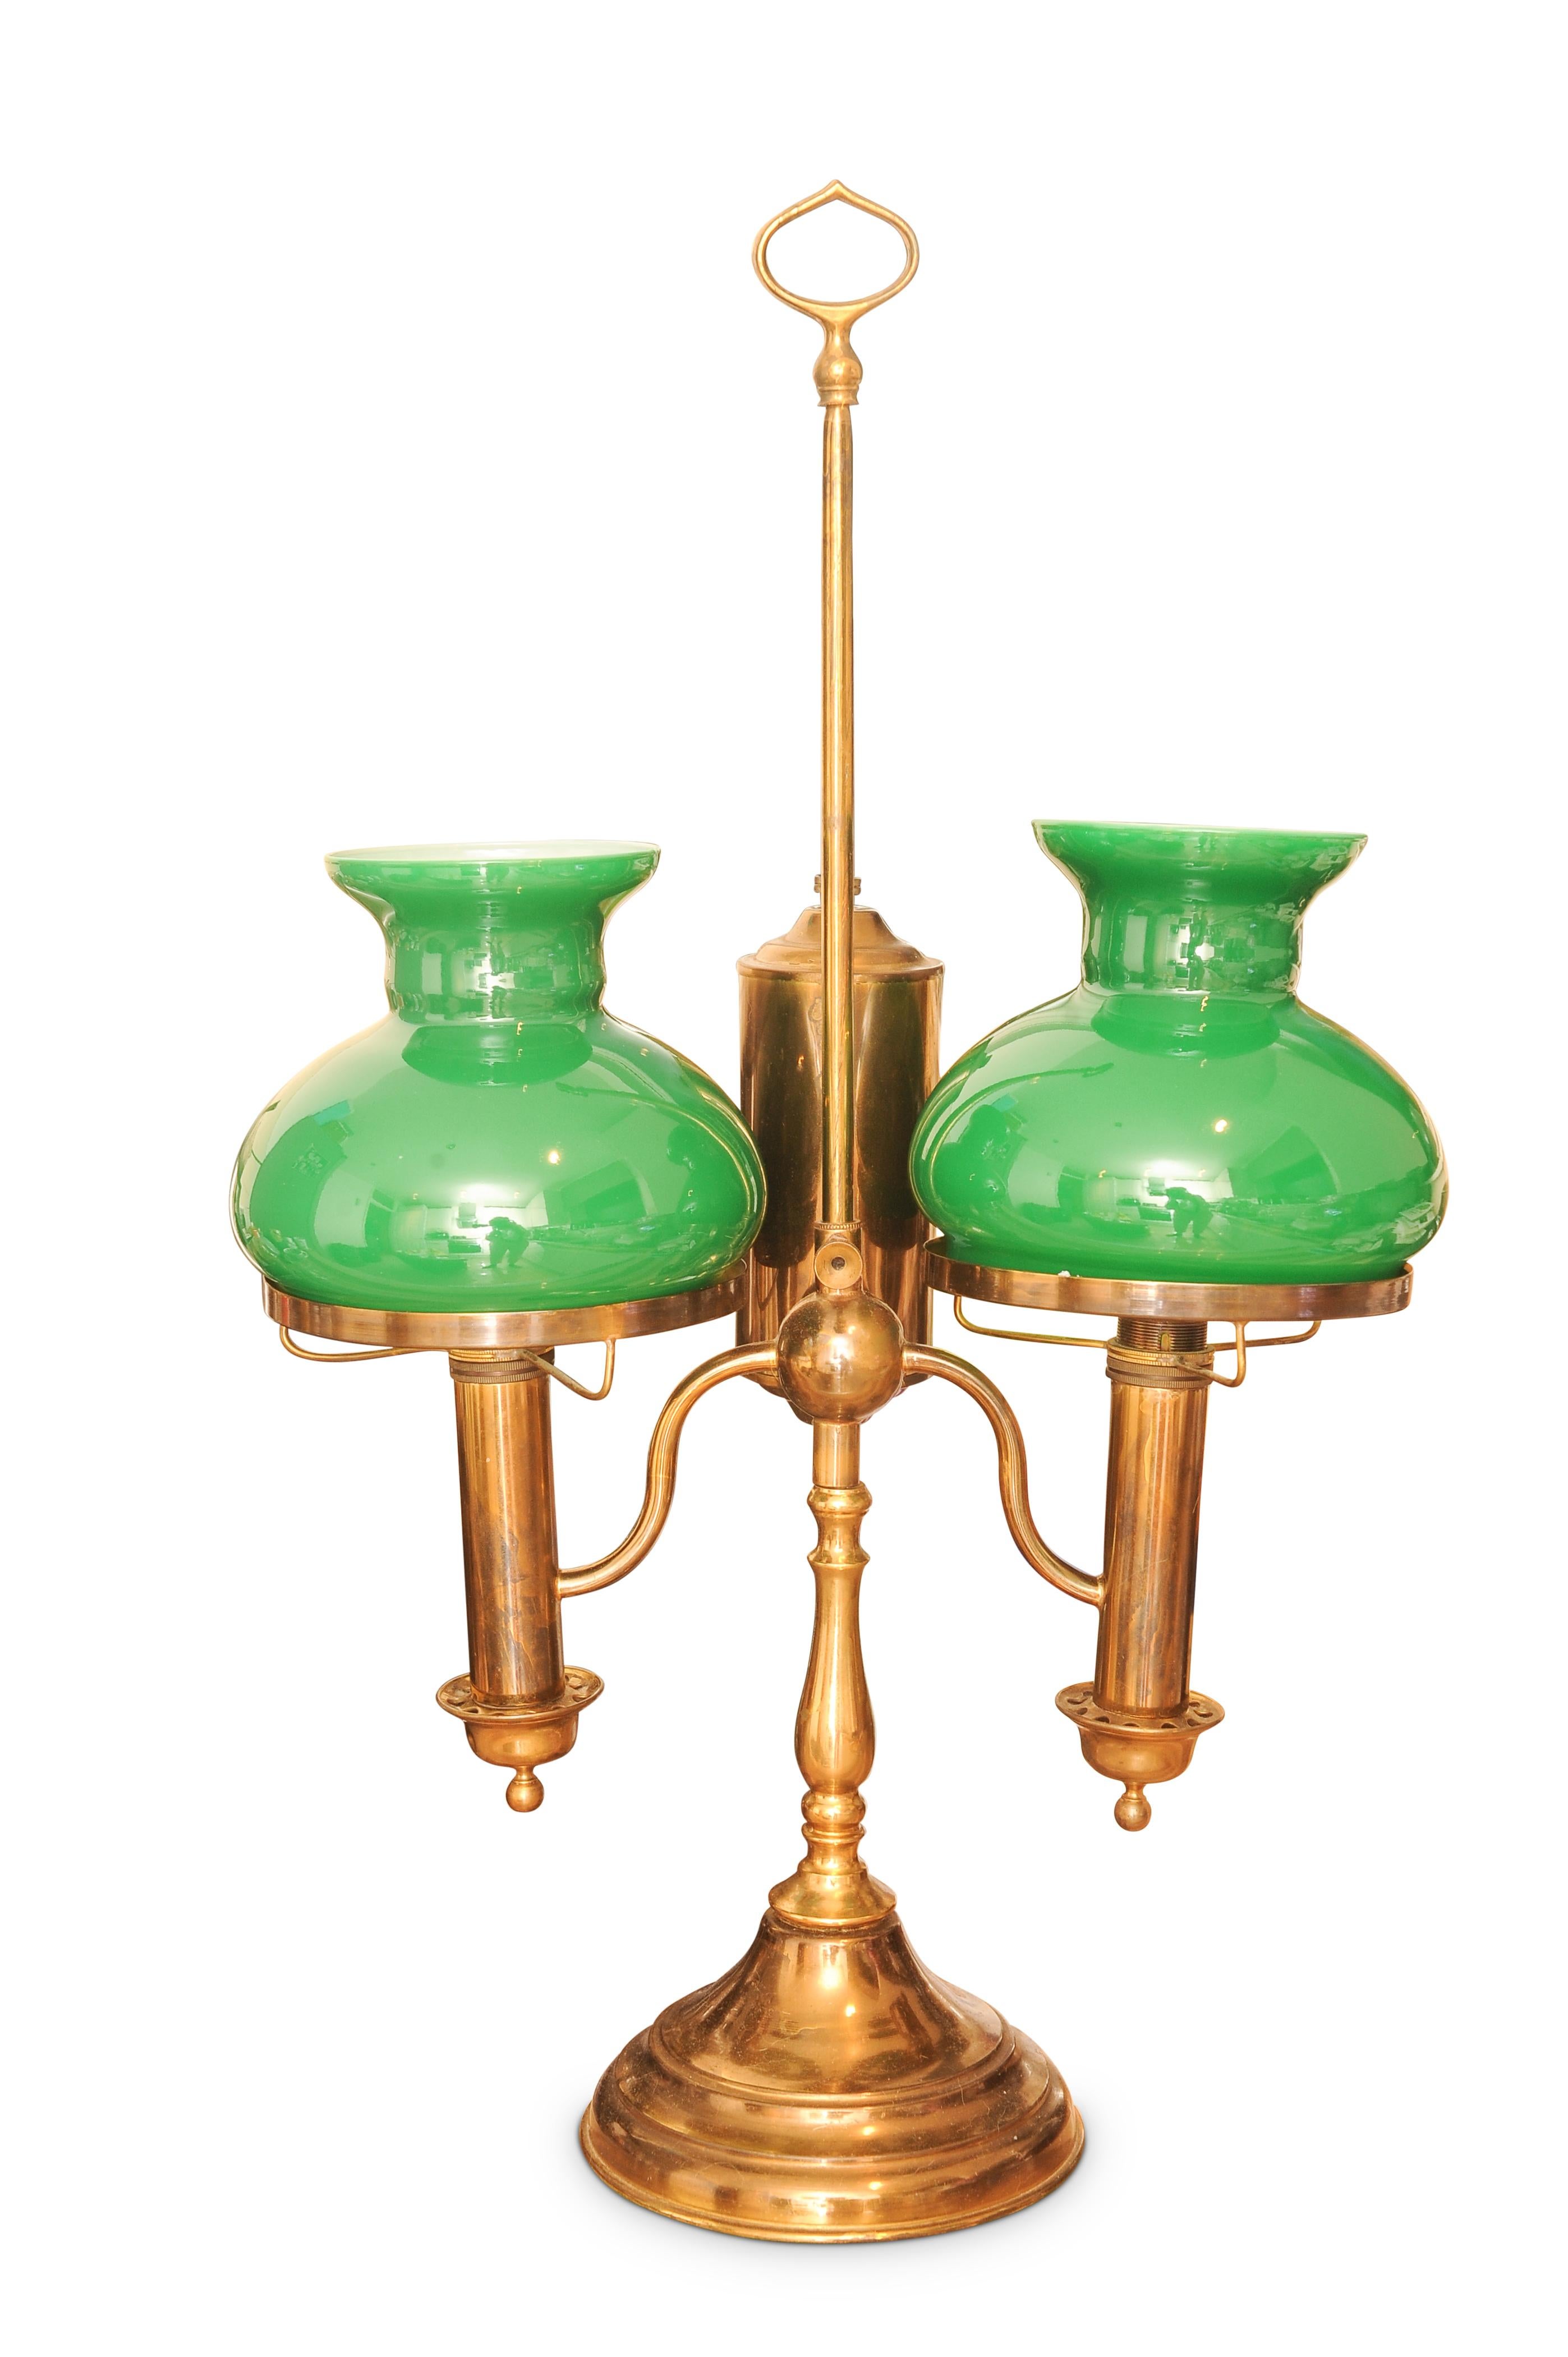 1800s lamp